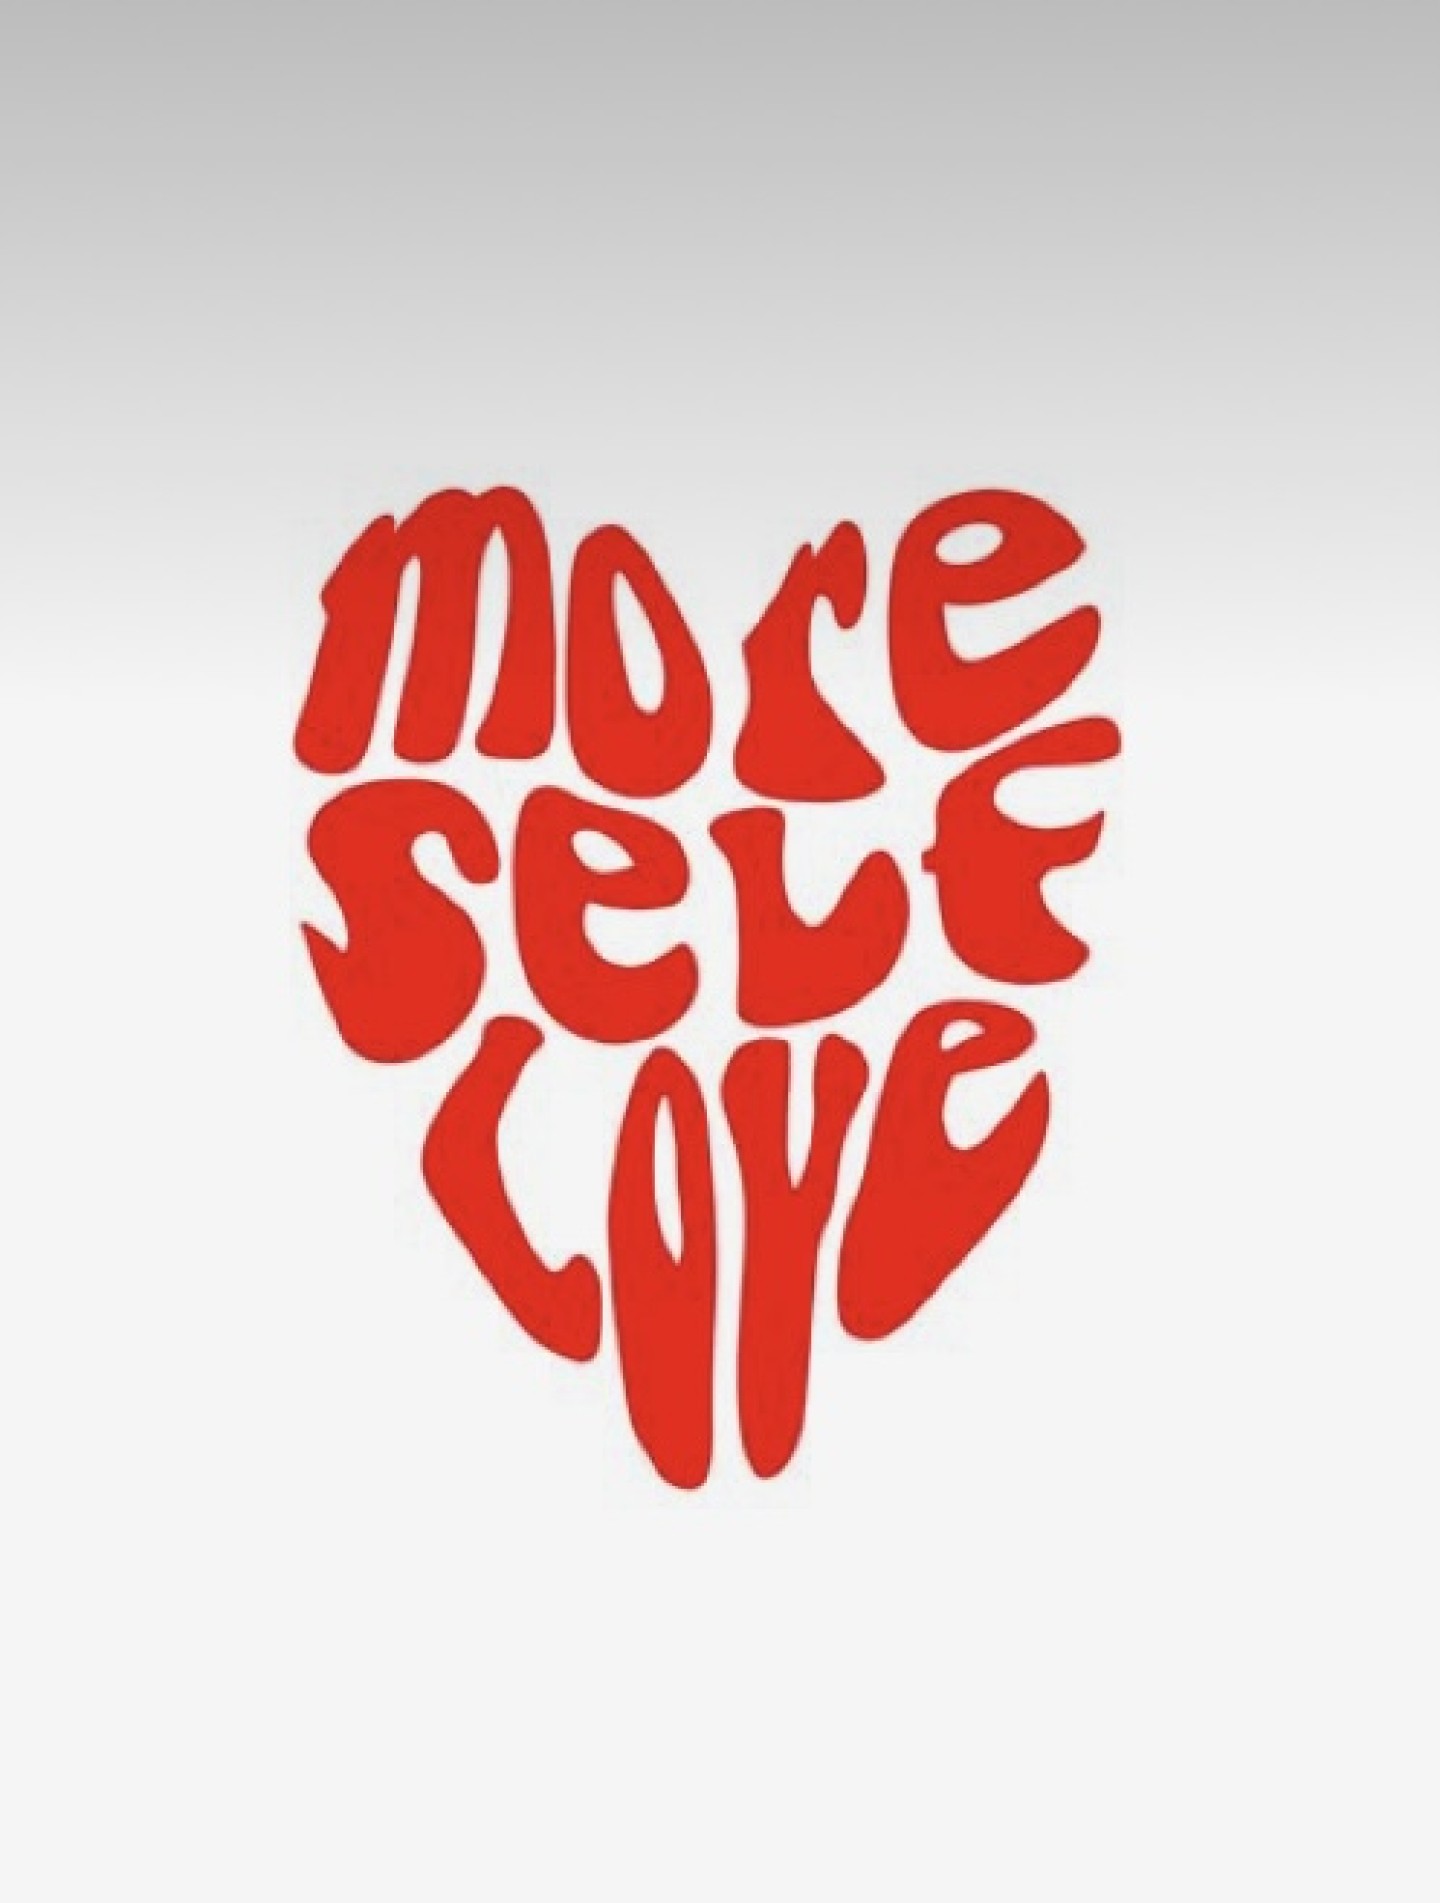 More self love